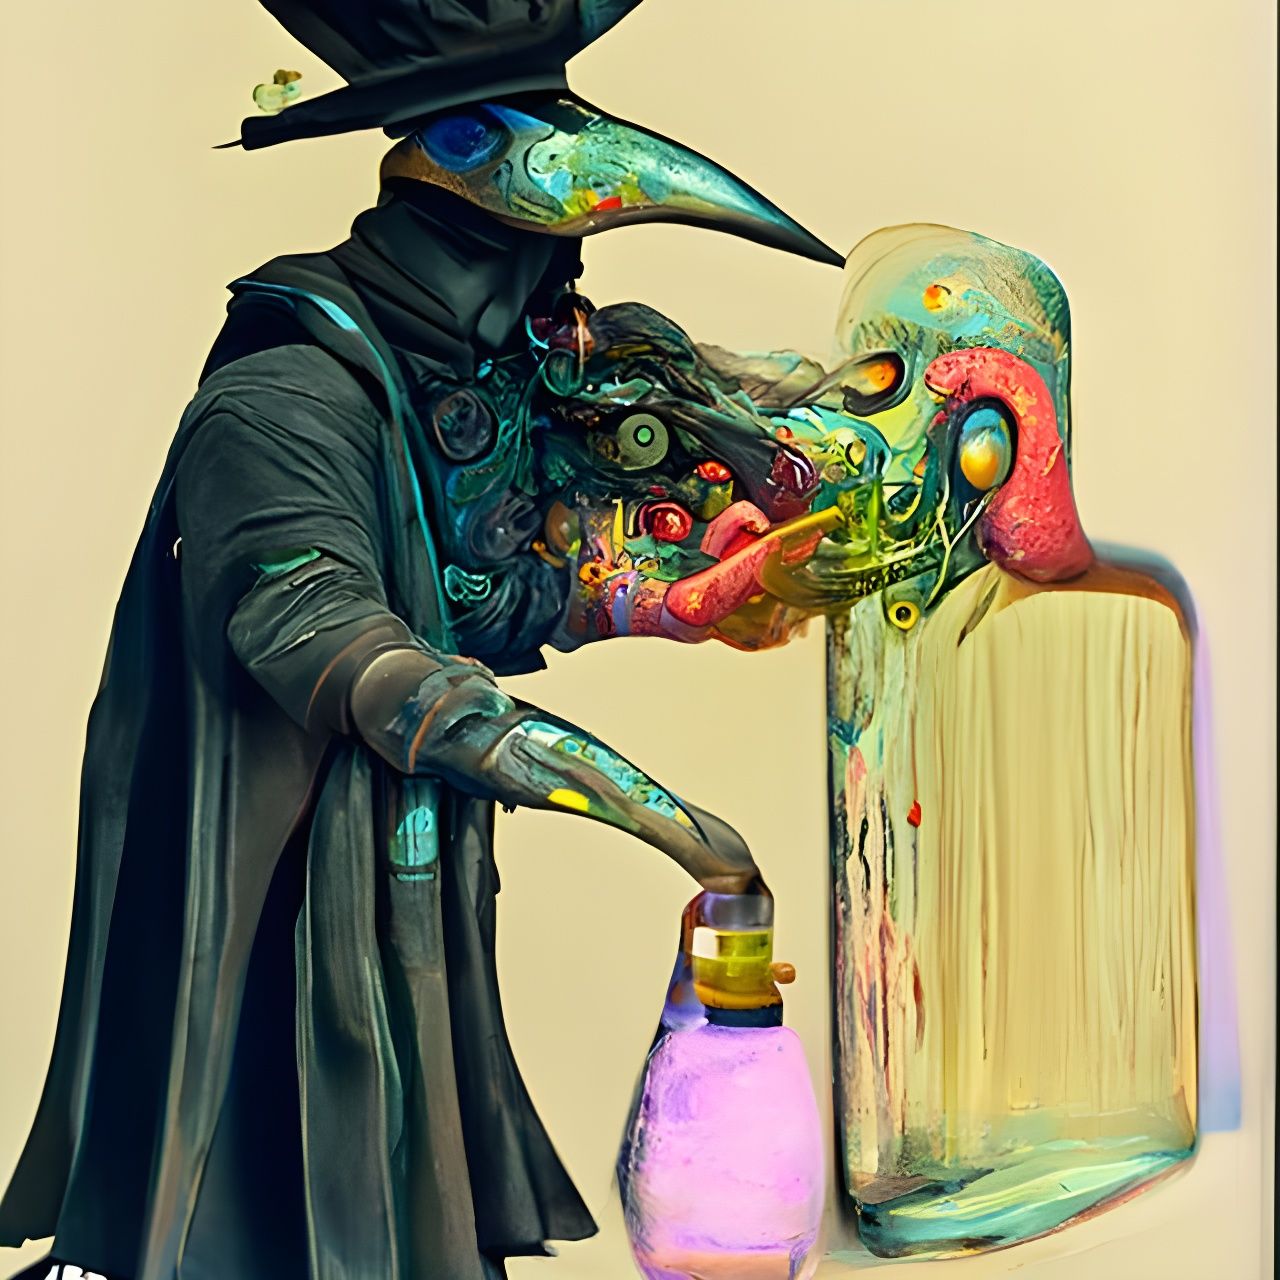 plague doctor healing using magical potions